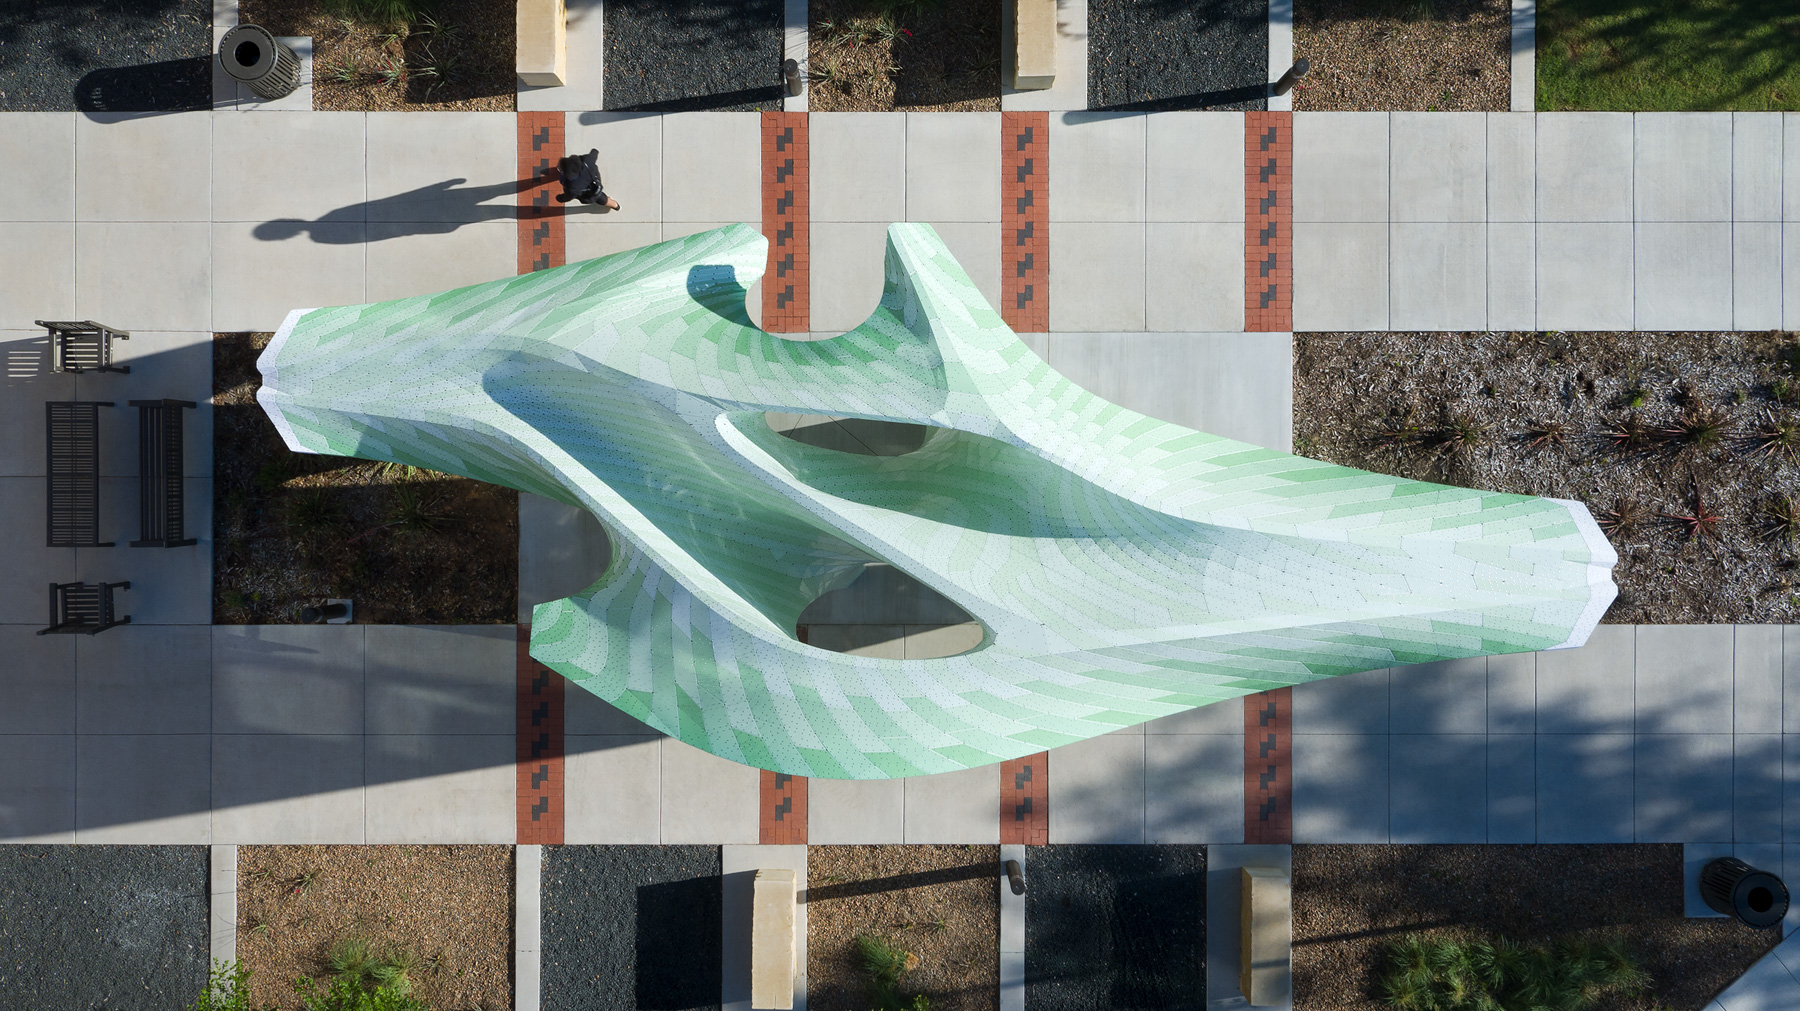 Large green geometric public art sculpture